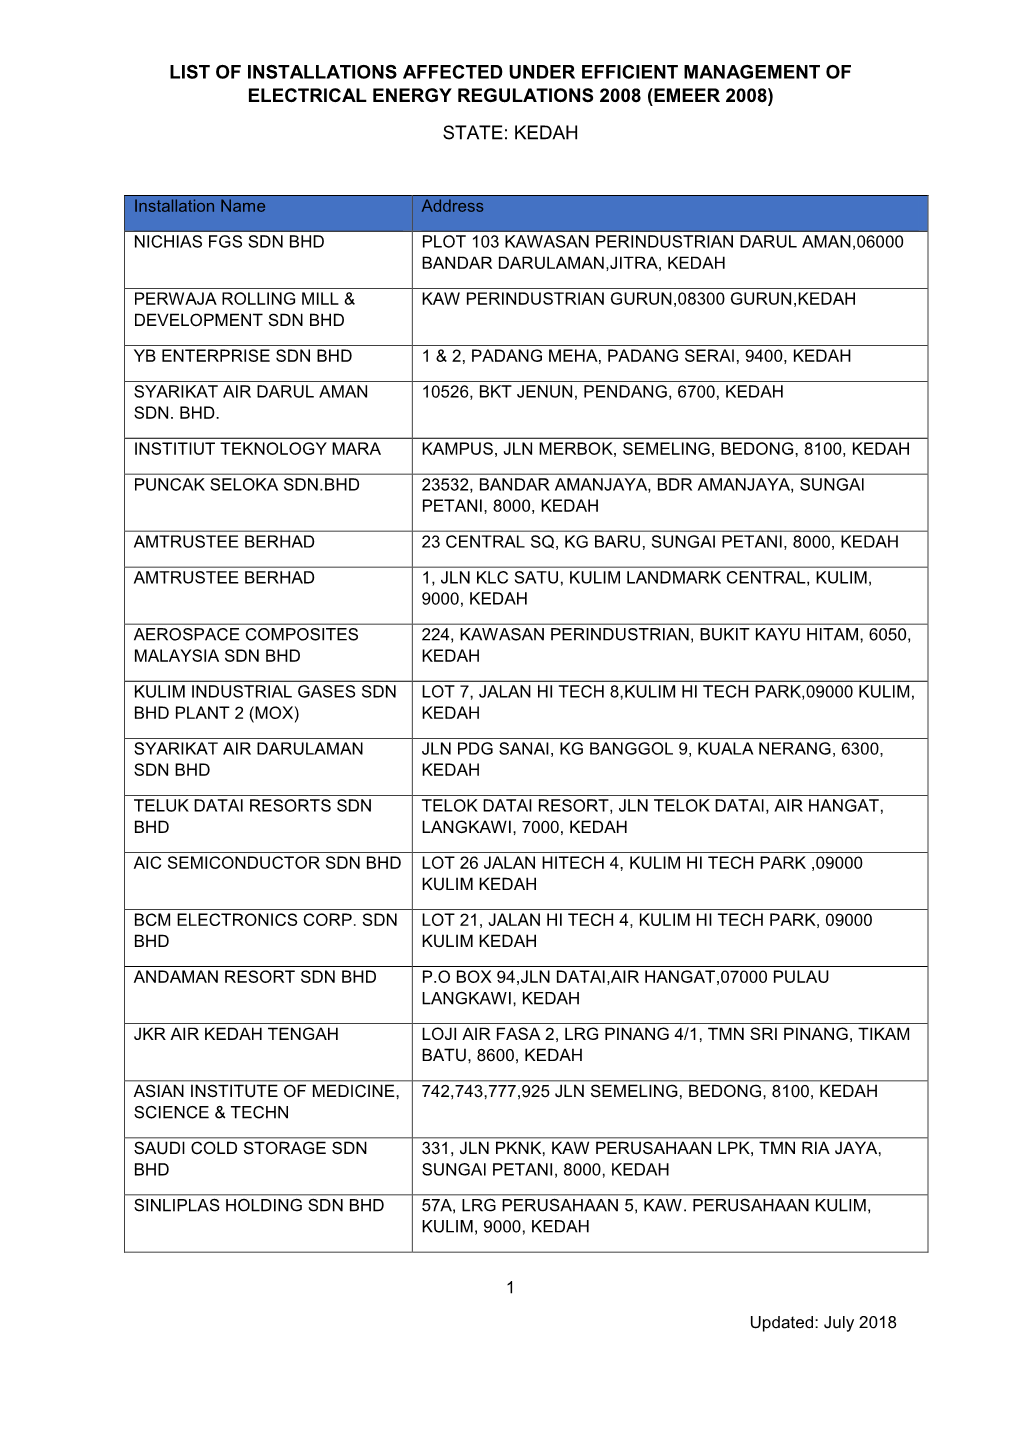 List of Installations Affected Under Efficient Management of Electrical Energy Regulations 2008 (Emeer 2008) State: Kedah